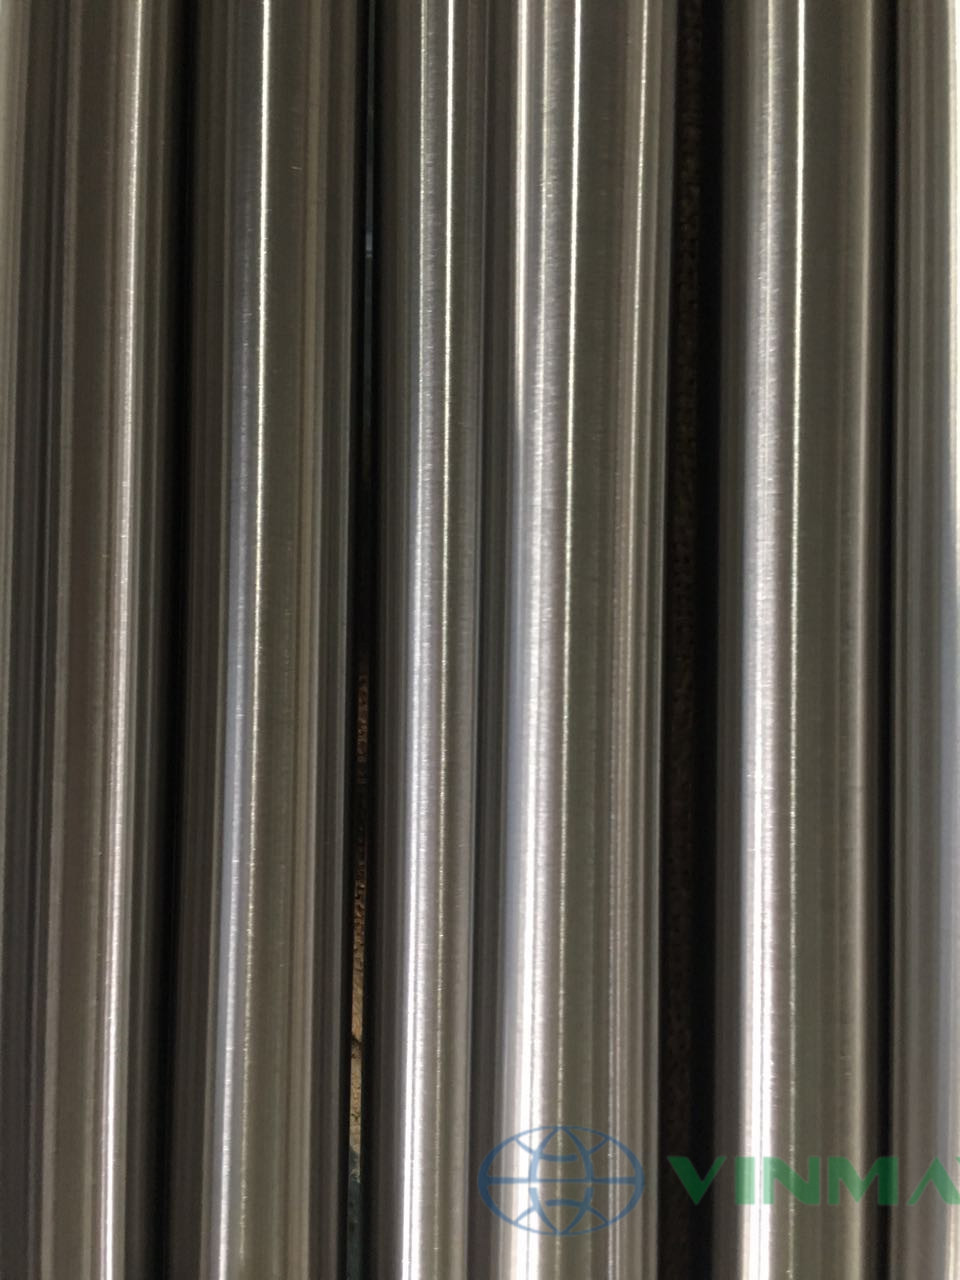 satin finish stainless steel tube